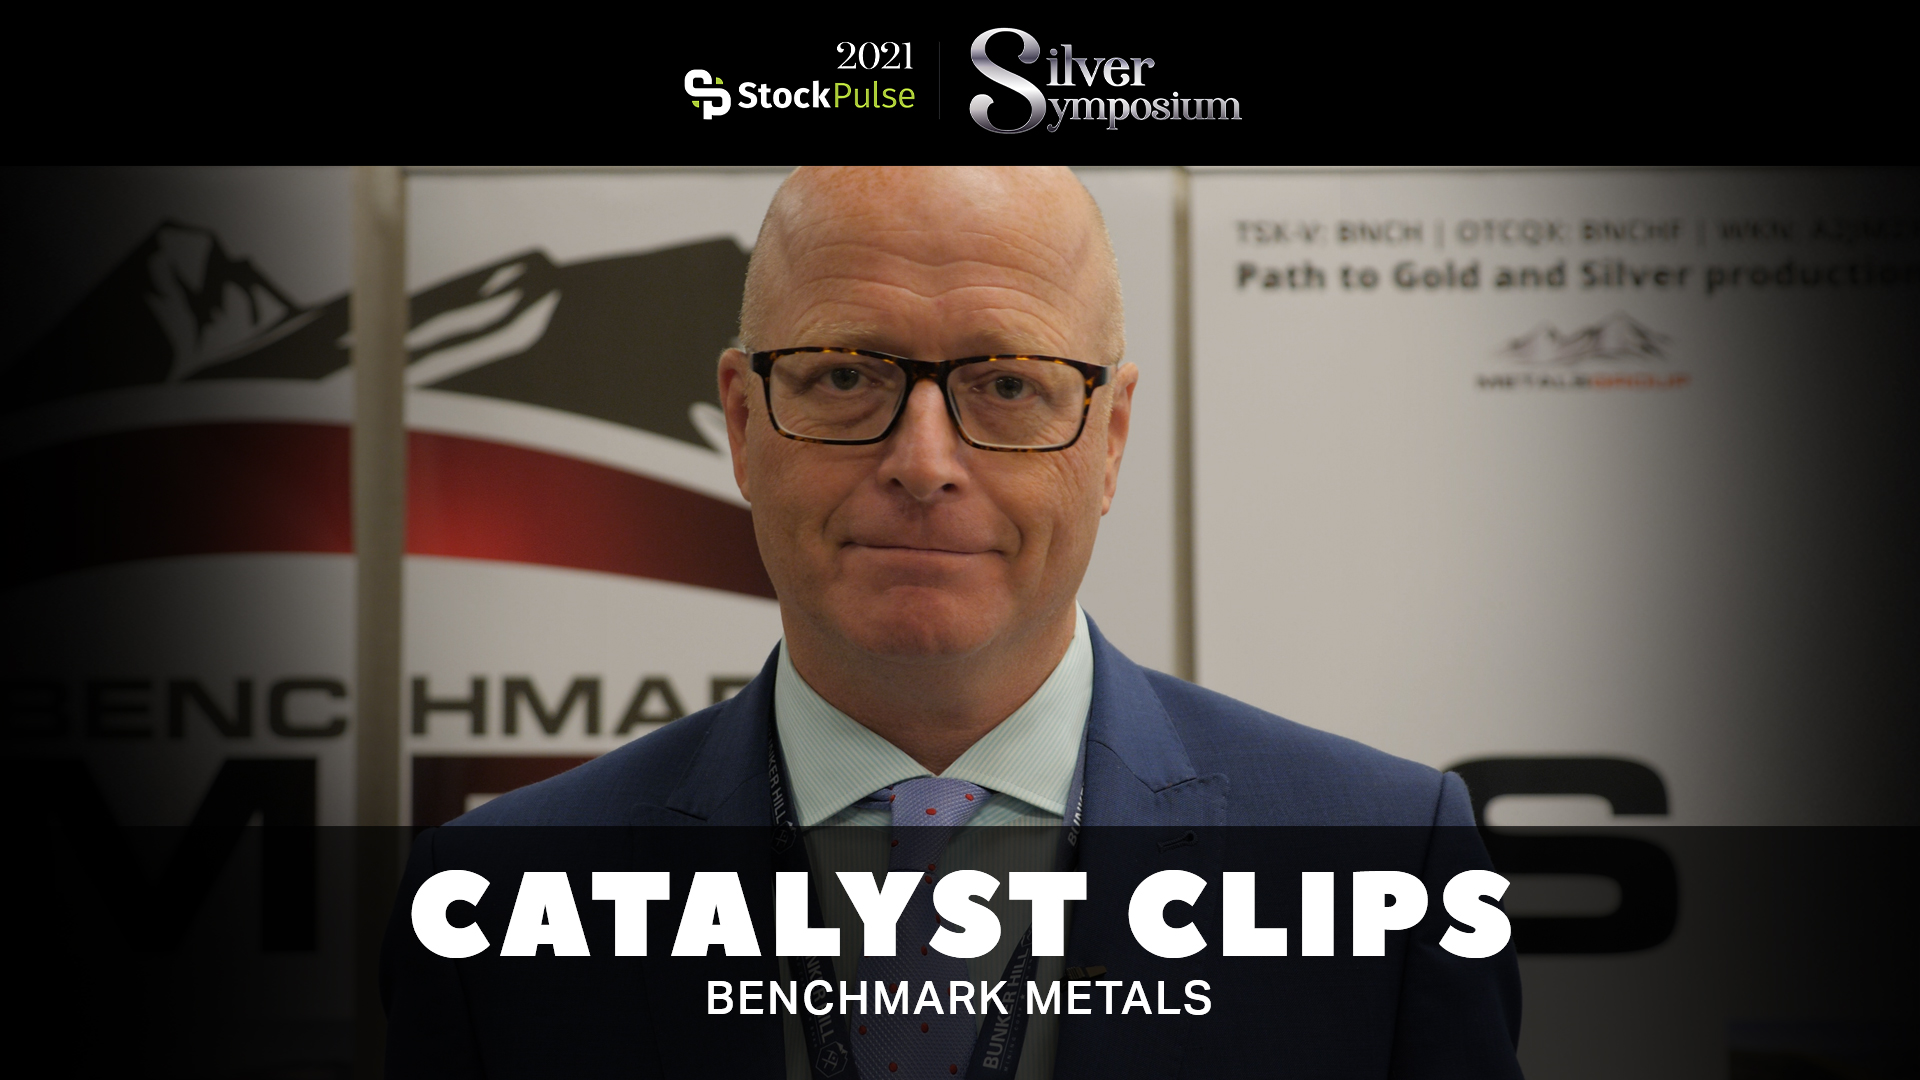 2021 StockPulse Silver Symposium Catalyst Clips | Jim Greig of Benchmark Metals